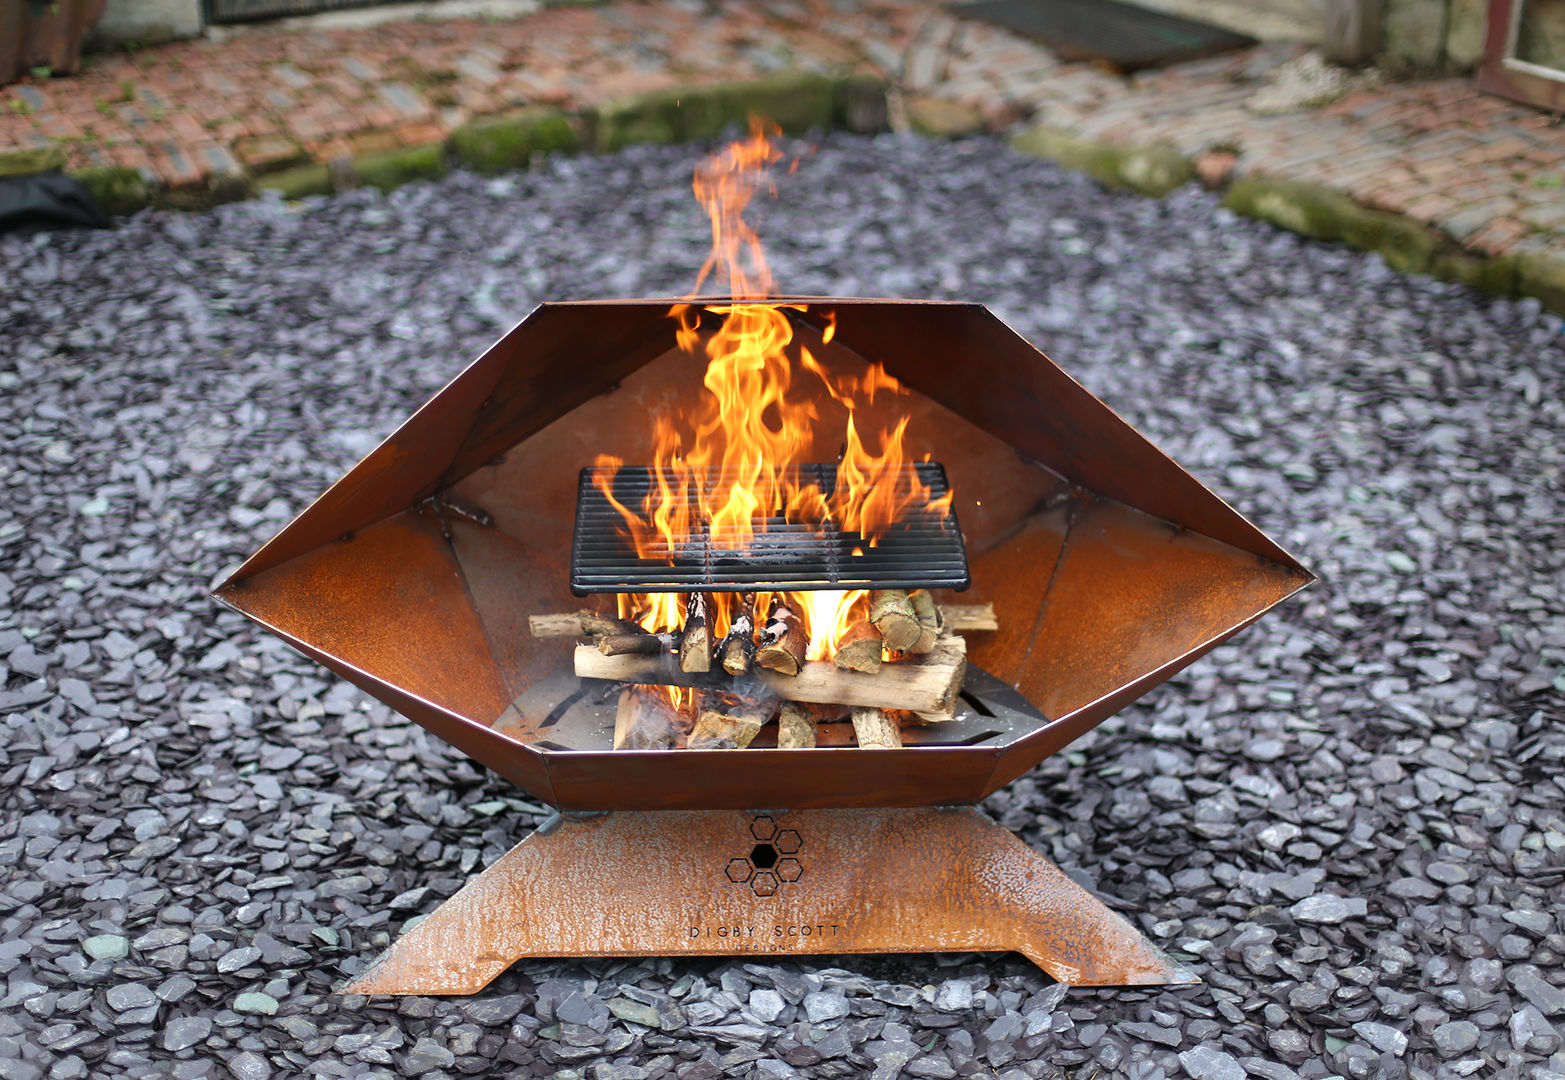 Sphenomegacorona Barbecue and Fire Pit Digby Scott Designs حديقة الحديد / الصلب fire pit,barbecue,bqq,Fire pits & barbecues